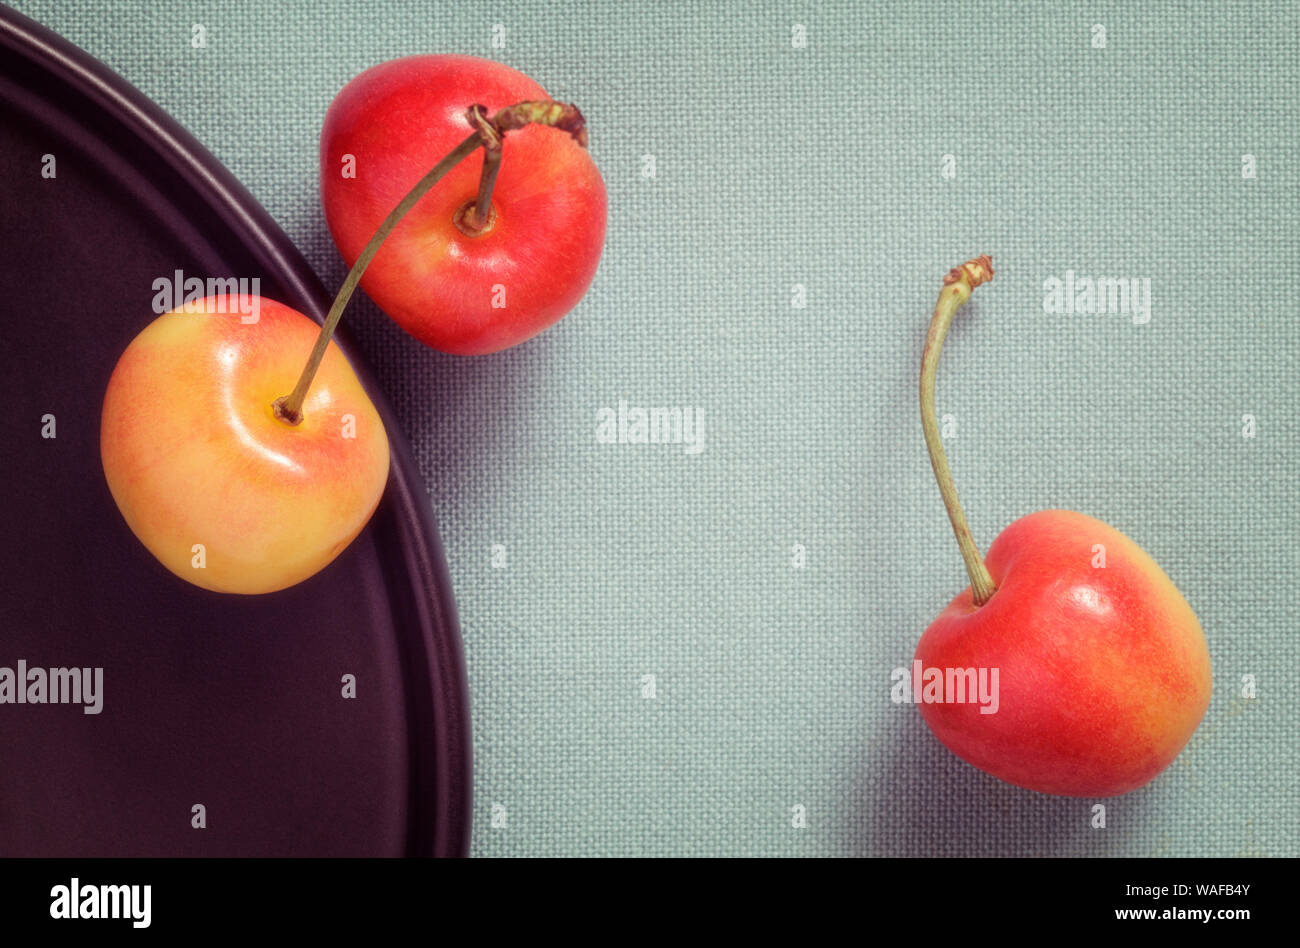 Three Rainier Cherries on green linen table cloth Stock Photo